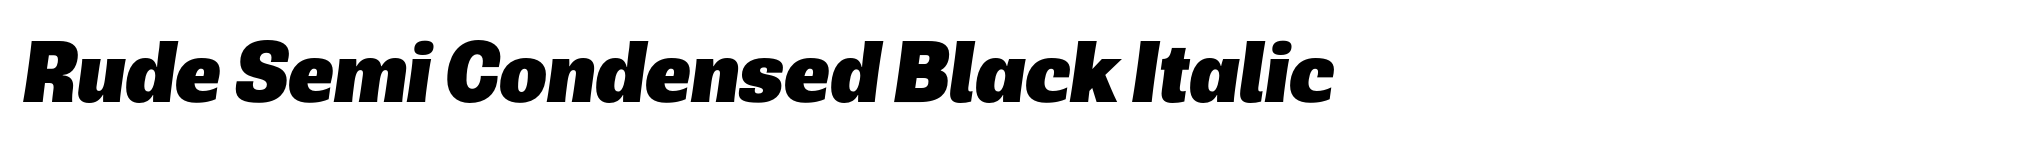 Rude Semi Condensed Black Italic image